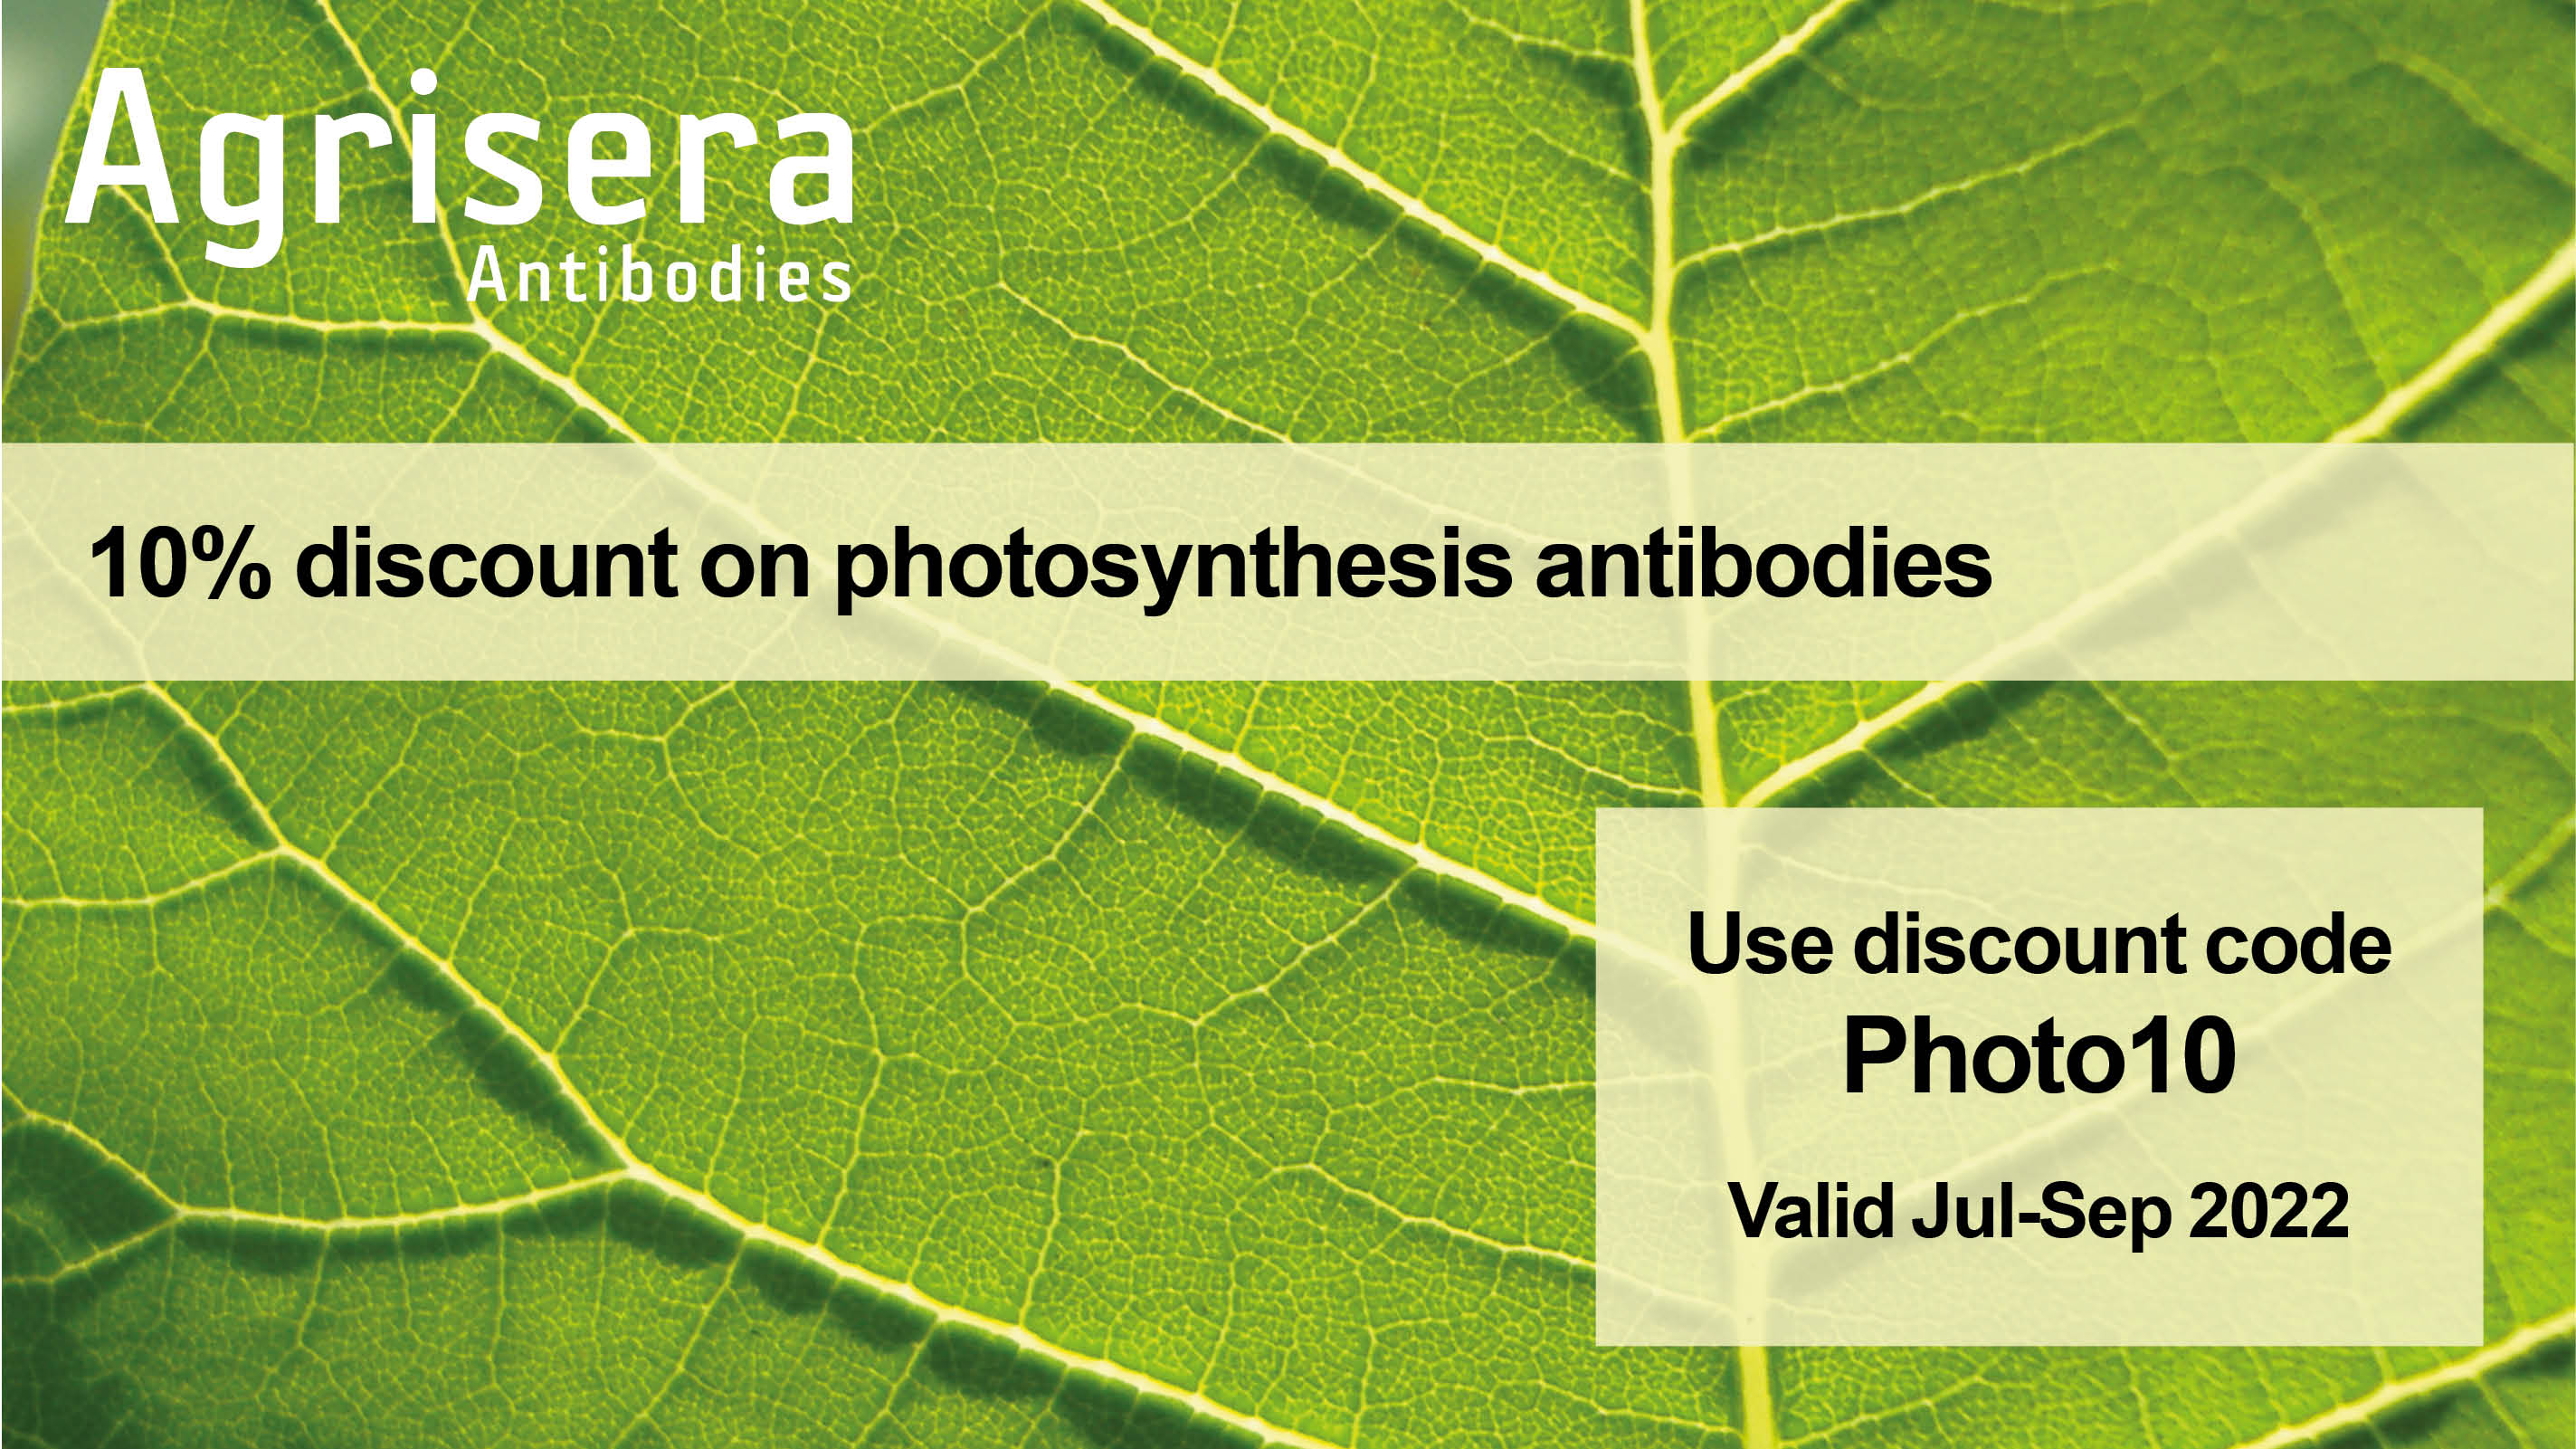 Agrisera Photosynthesis Antibody Promo